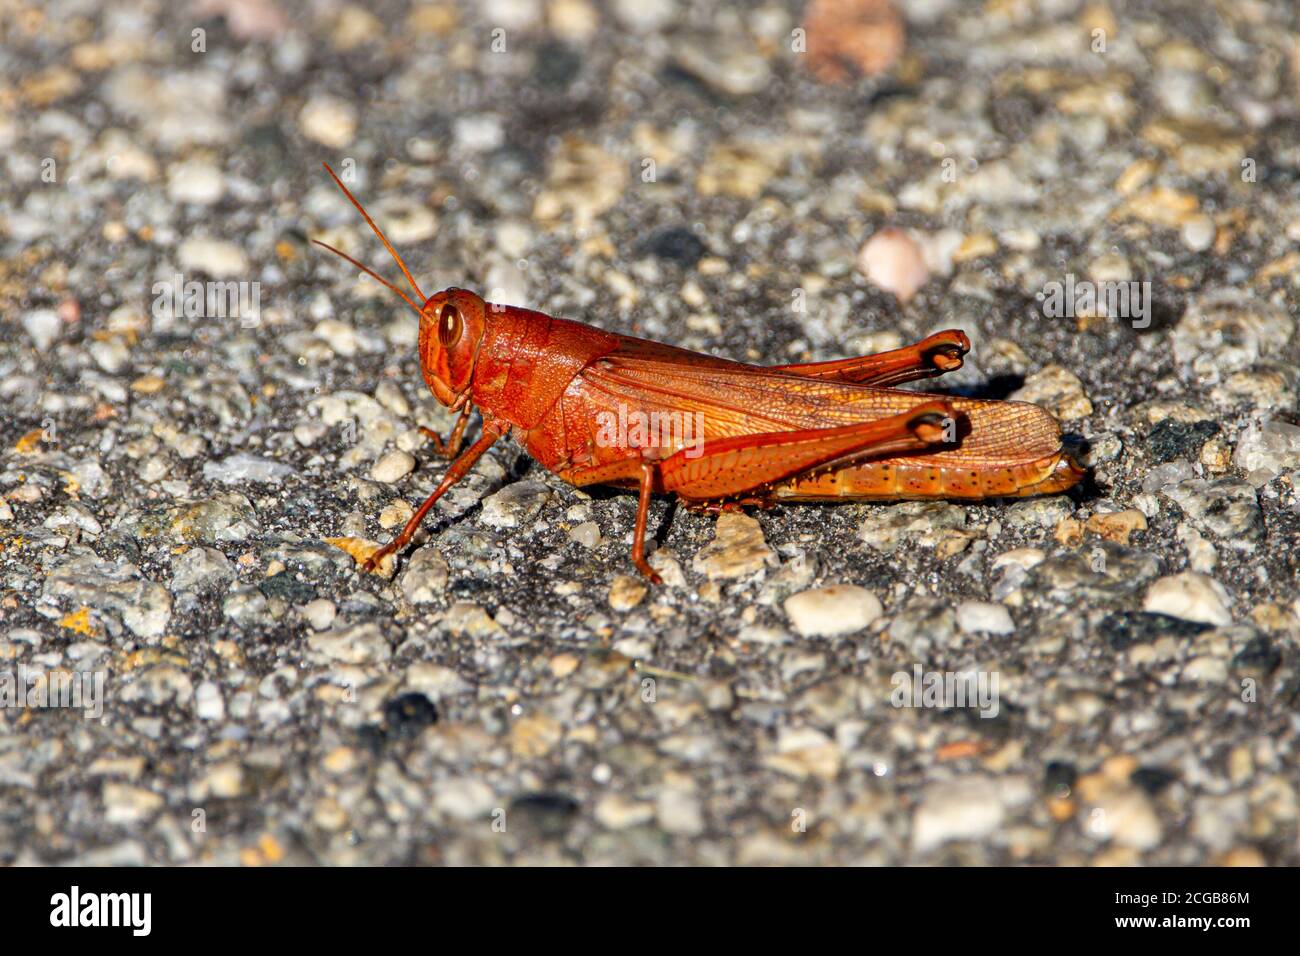 Close up macro lens image of a Carolina Locust (Dissosteira carolina) standing on stone ground. This vibrant red, orange large grasshopper is commonly Stock Photo